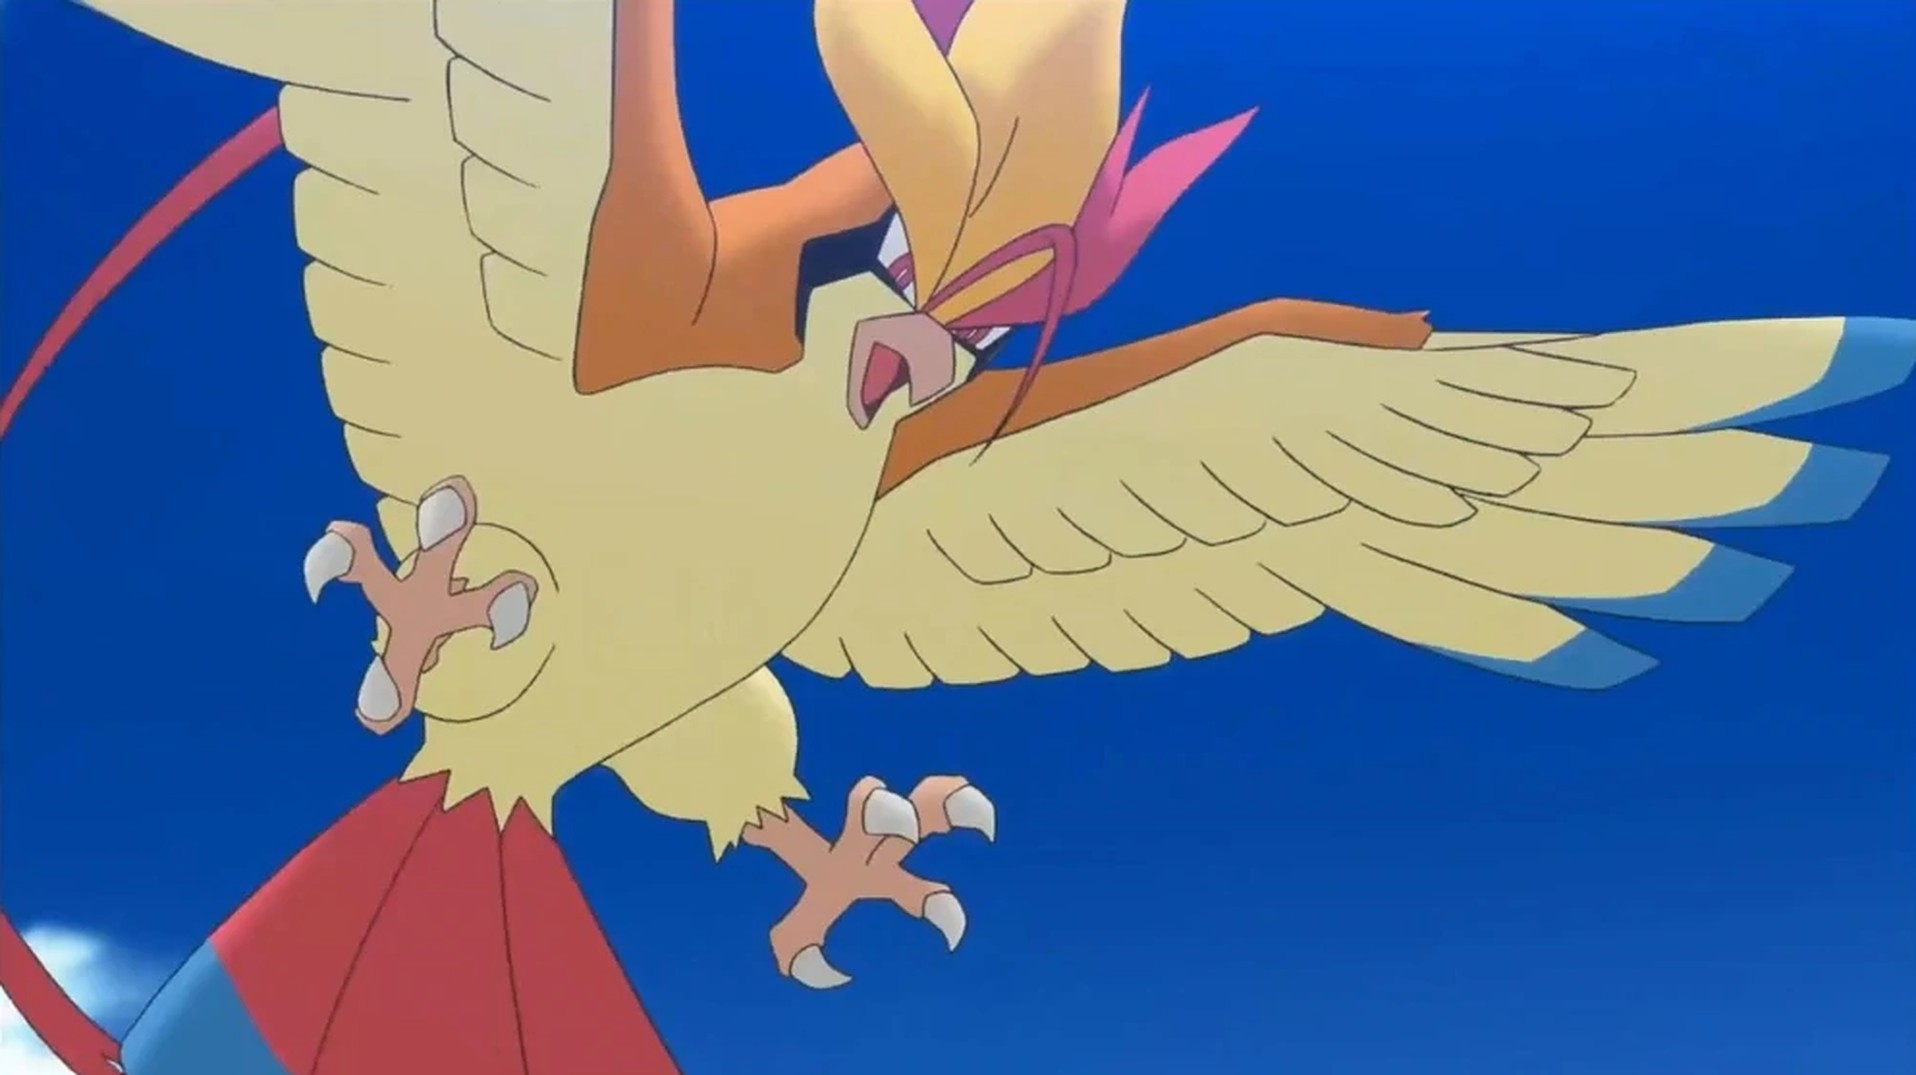 Pidgeot is one of the best flying type pokemon in pokemon go